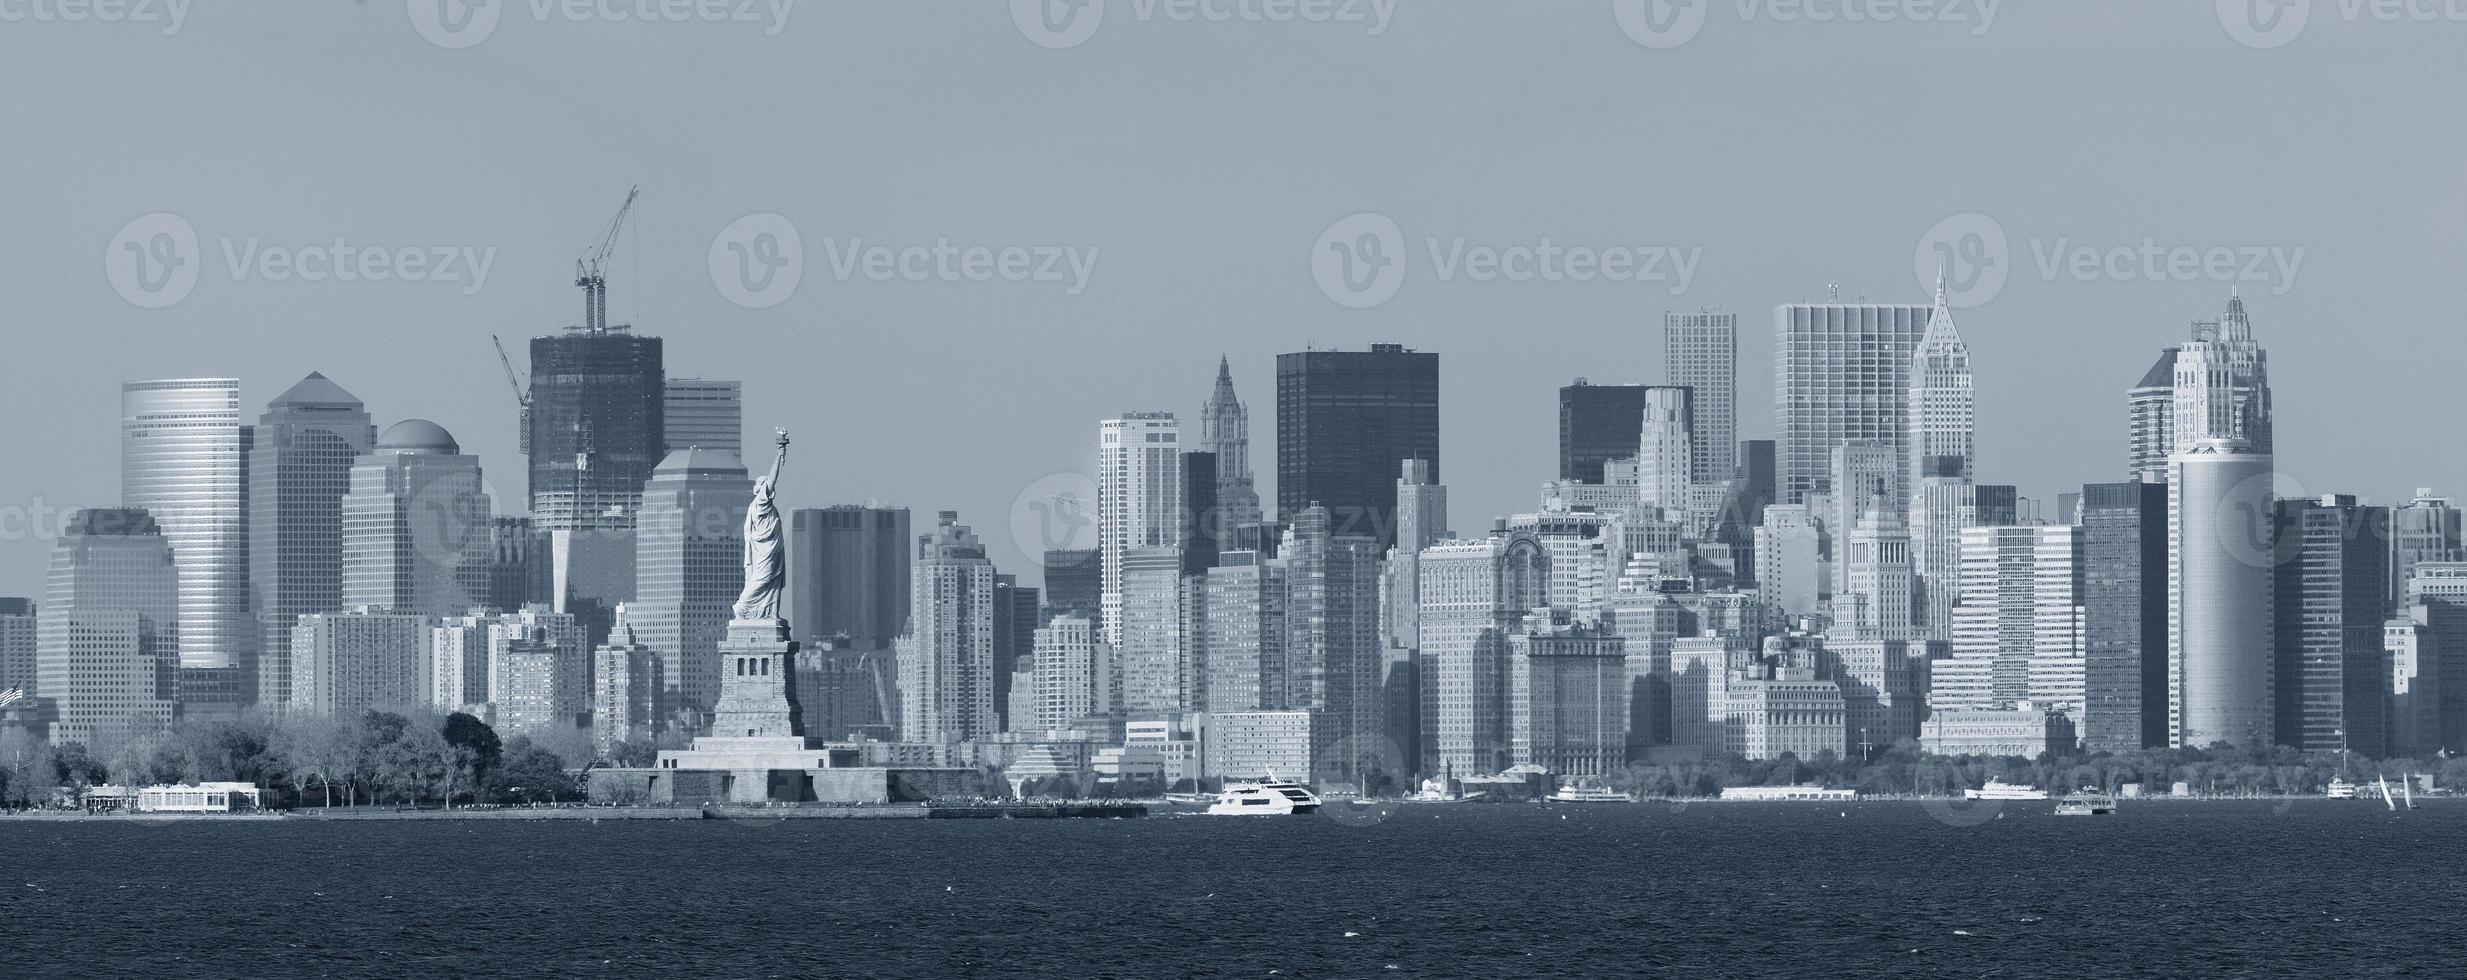 nova york manhattan preto e branco foto